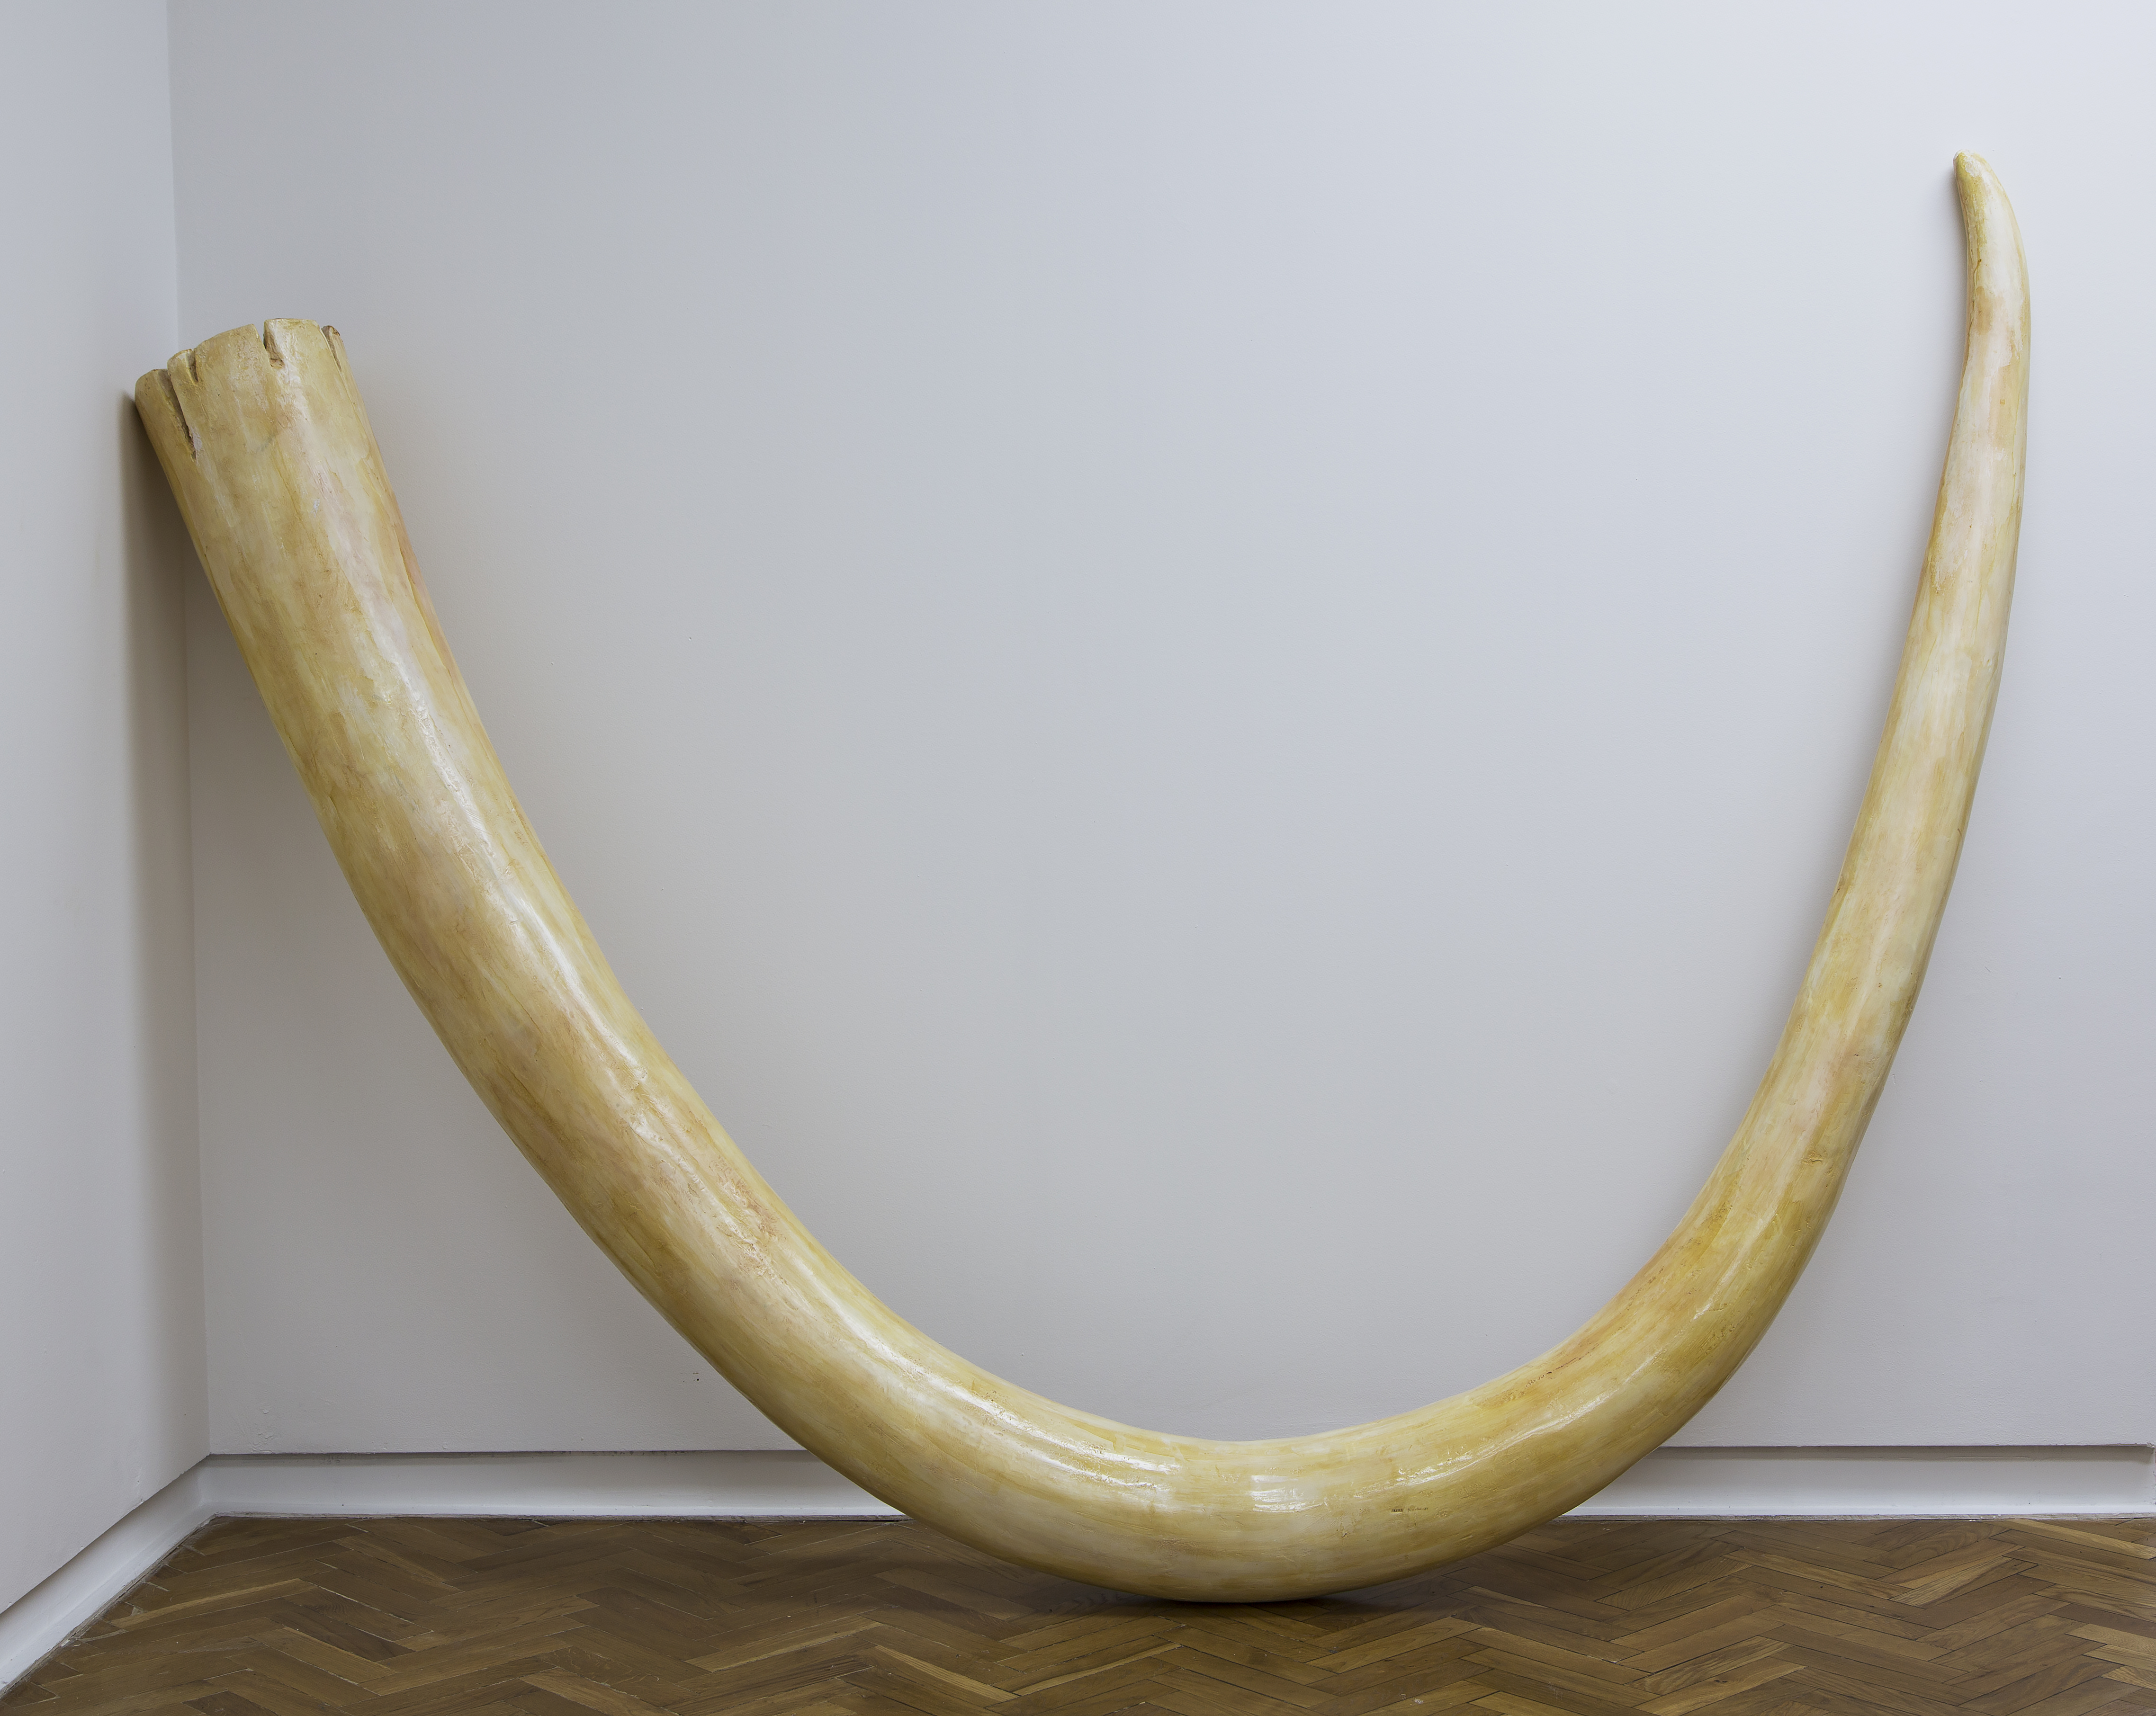 Joanna Malinowska,  Kieł mamuta; Mammoth Tusk, 2015